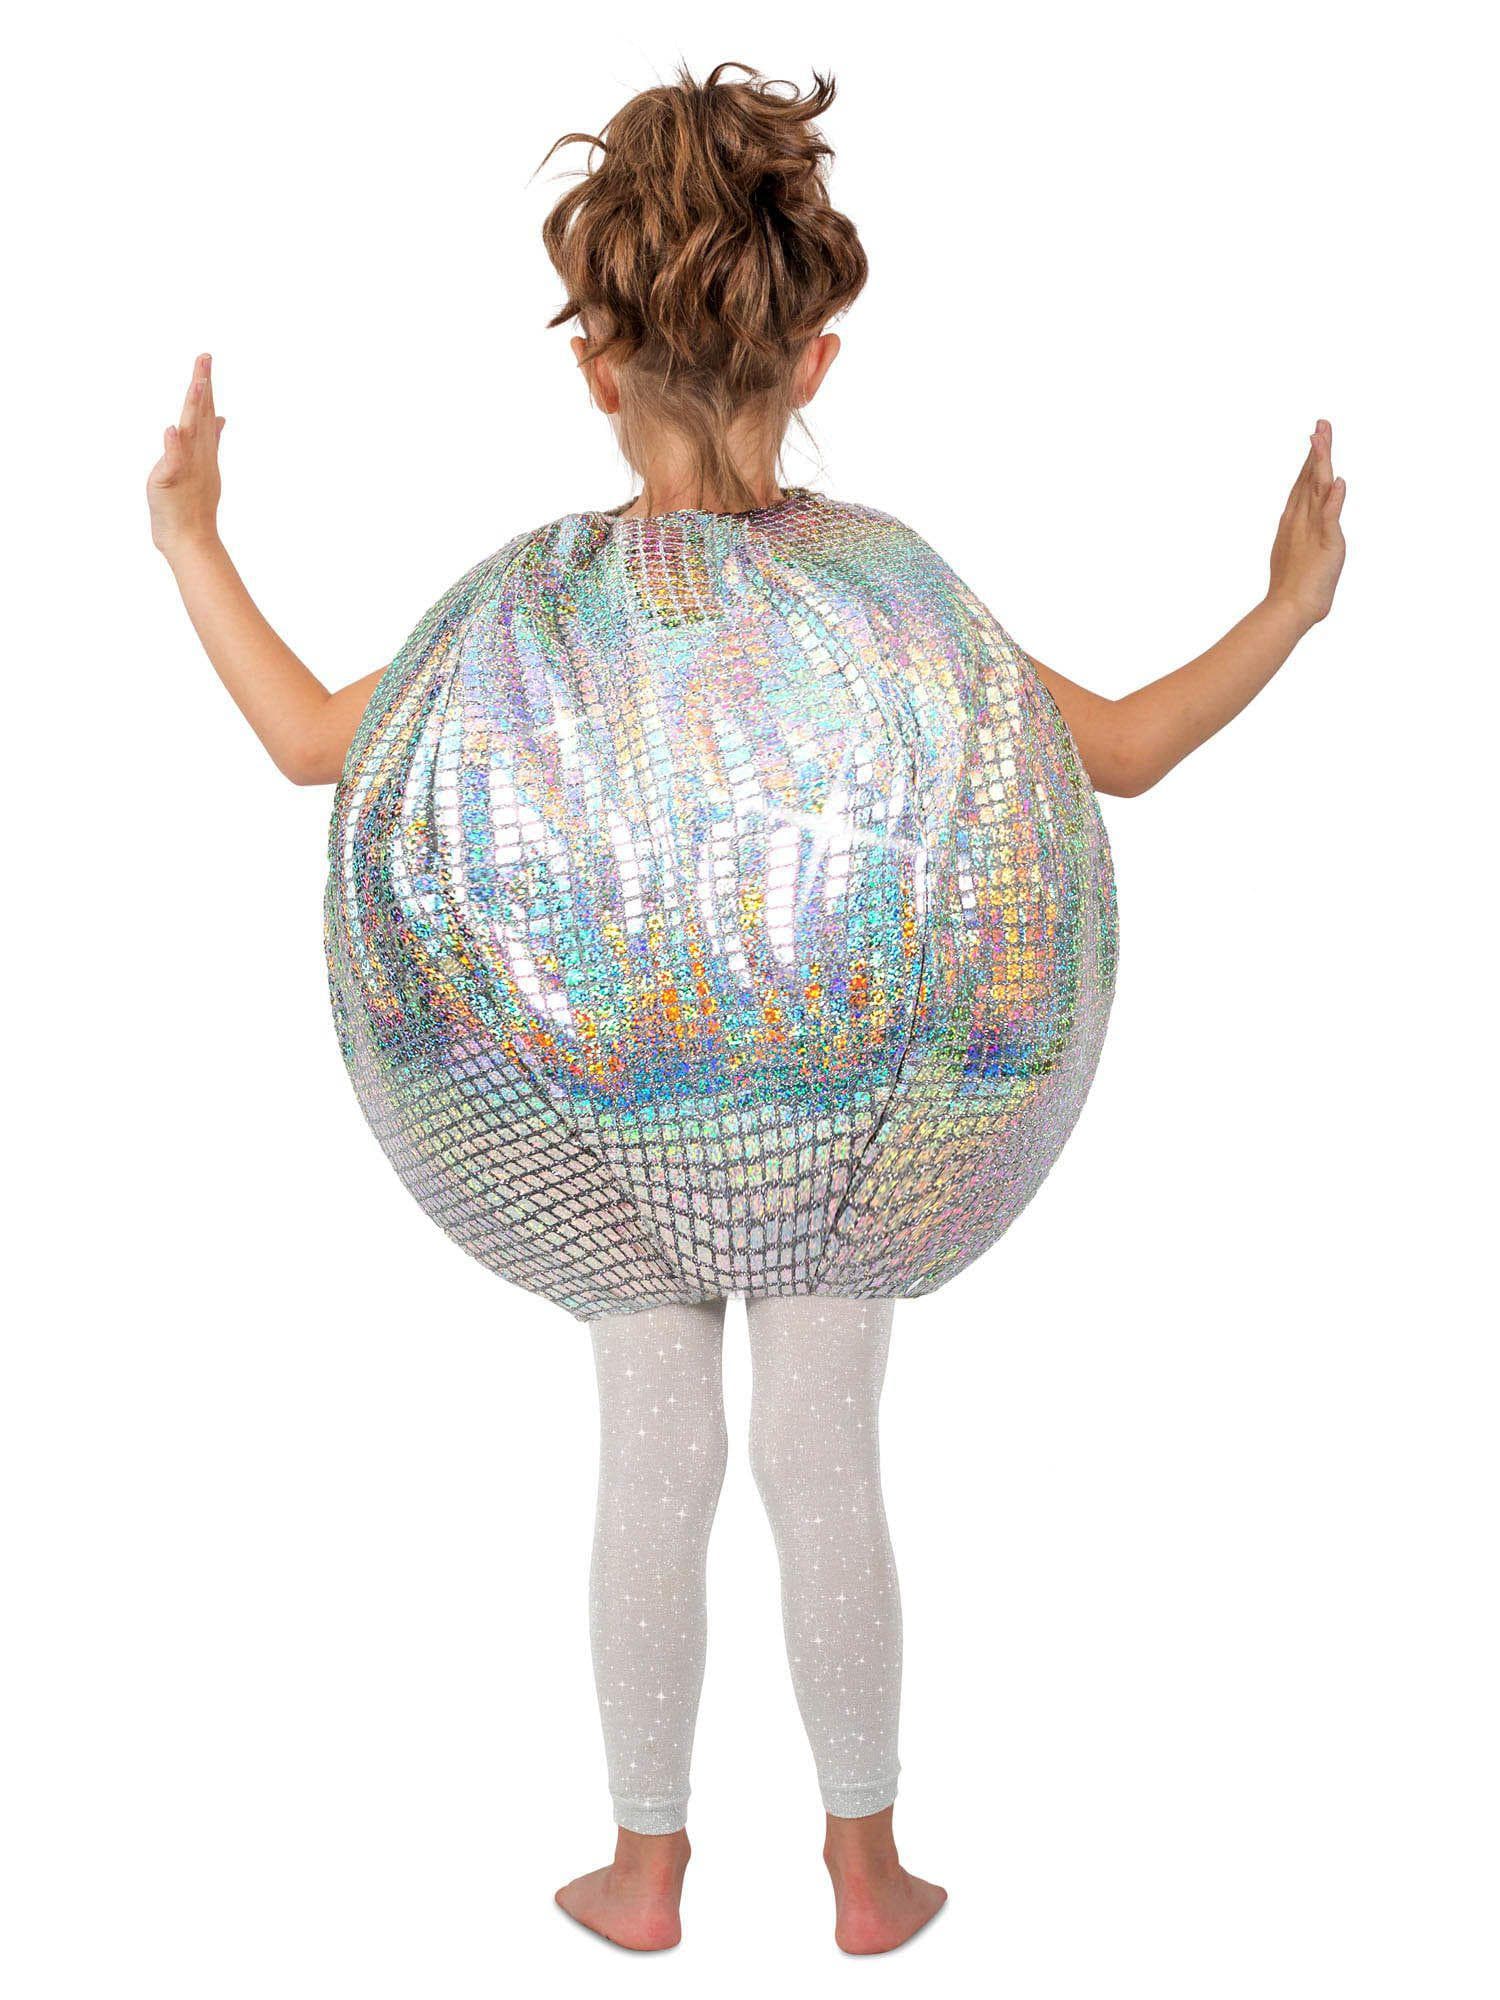 Kid's Disco Ball Costume - costumes.com